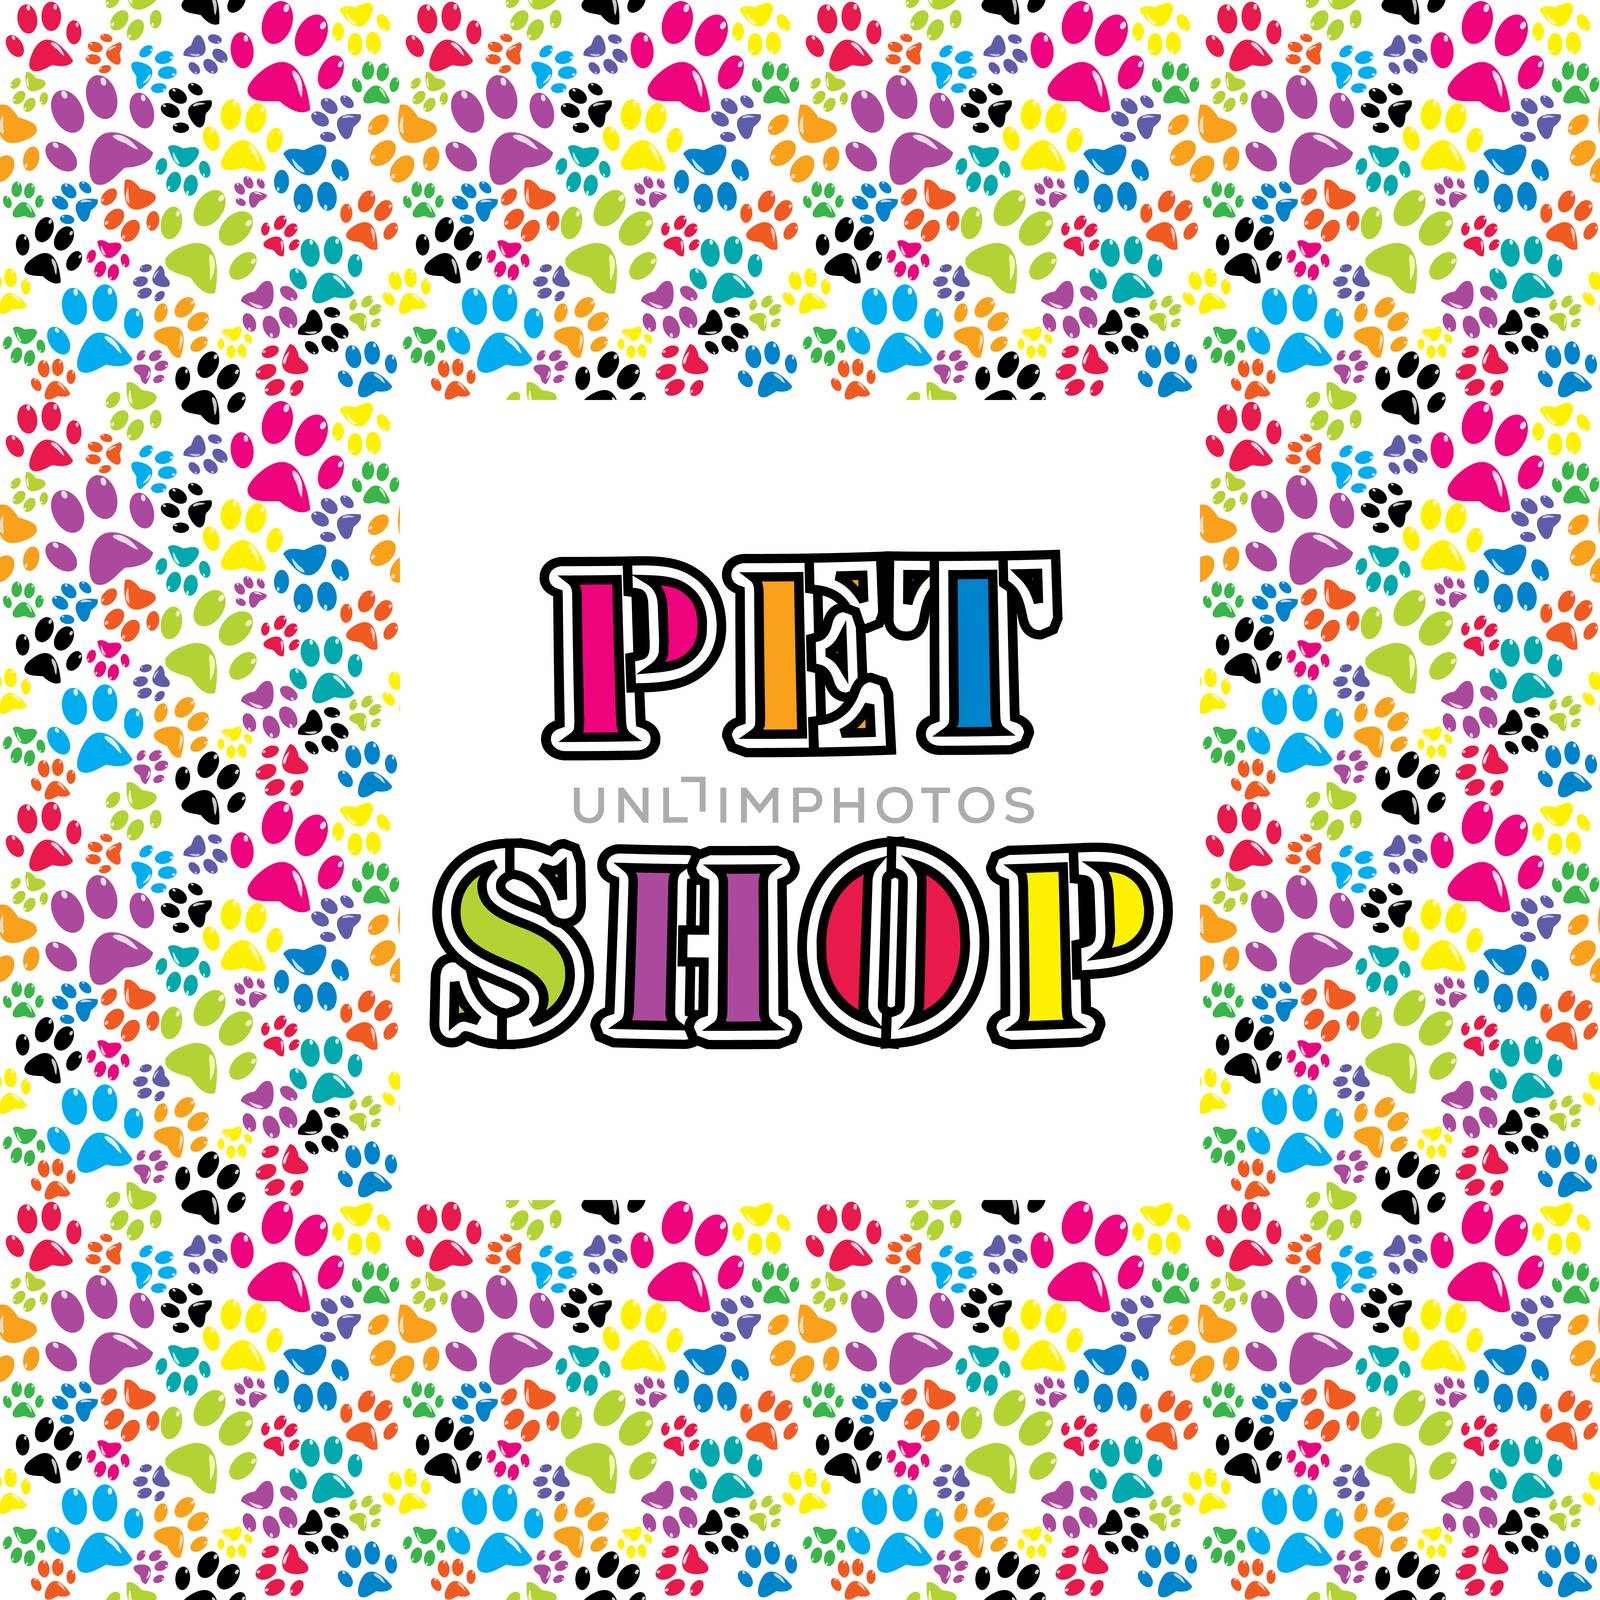 Pet shop background by hibrida13